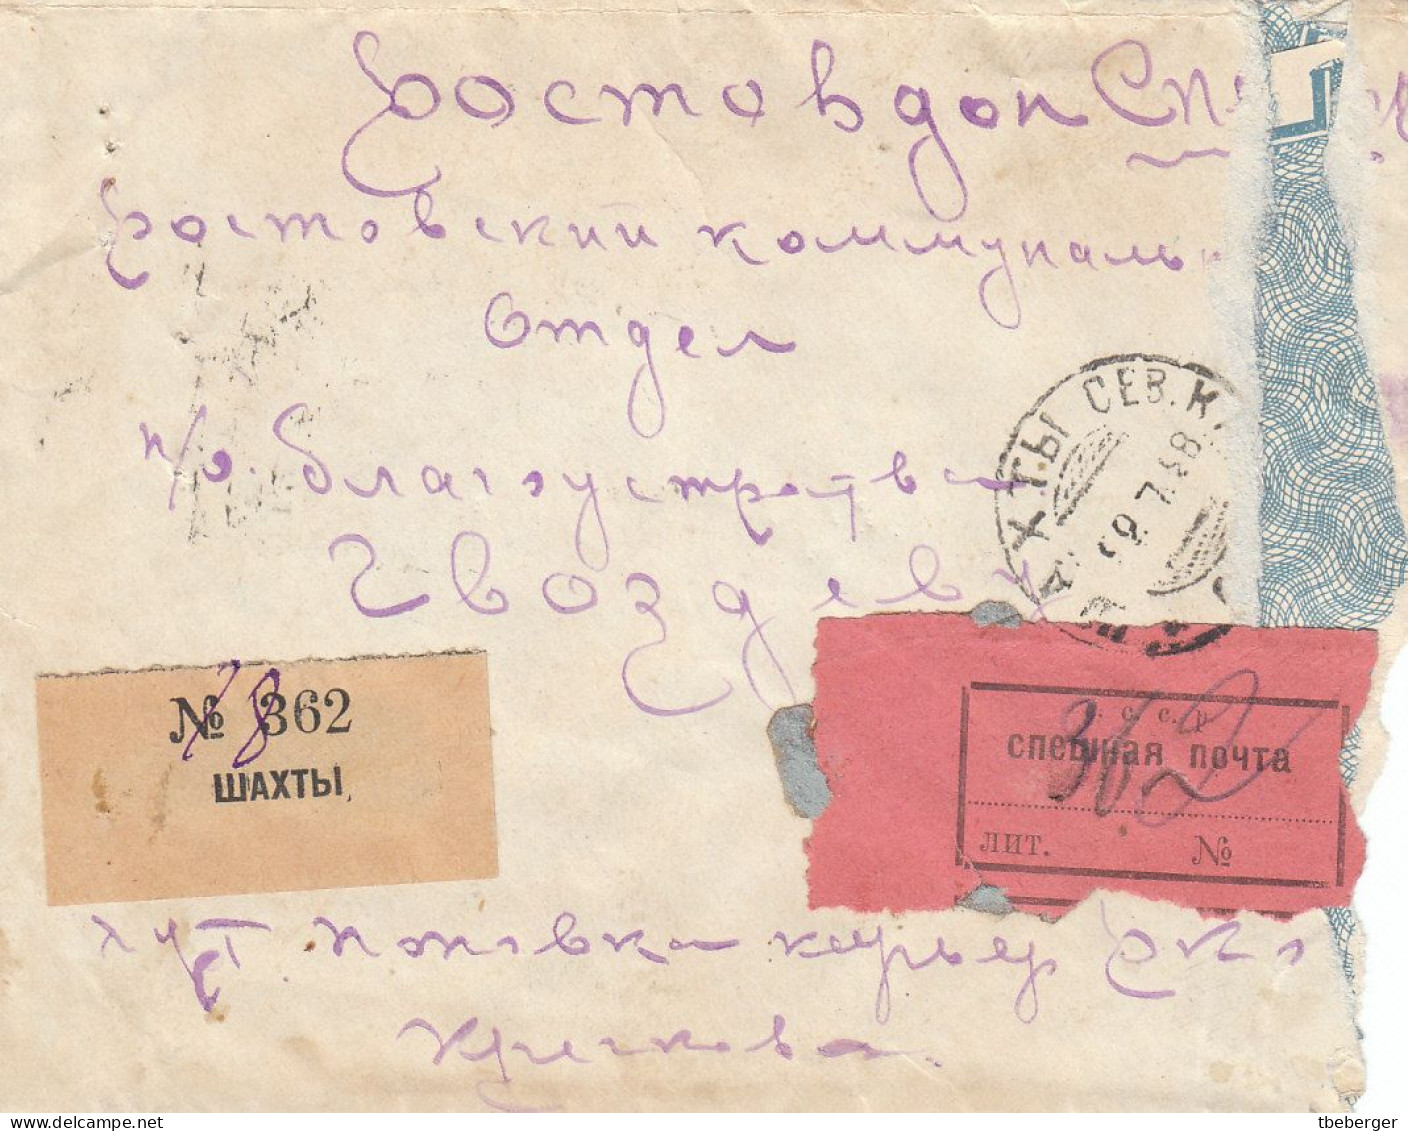 Russia USSR 1928 Special Post Express Mail SHAKHTY To ROSTOV, Ex Miskin (40) - Brieven En Documenten